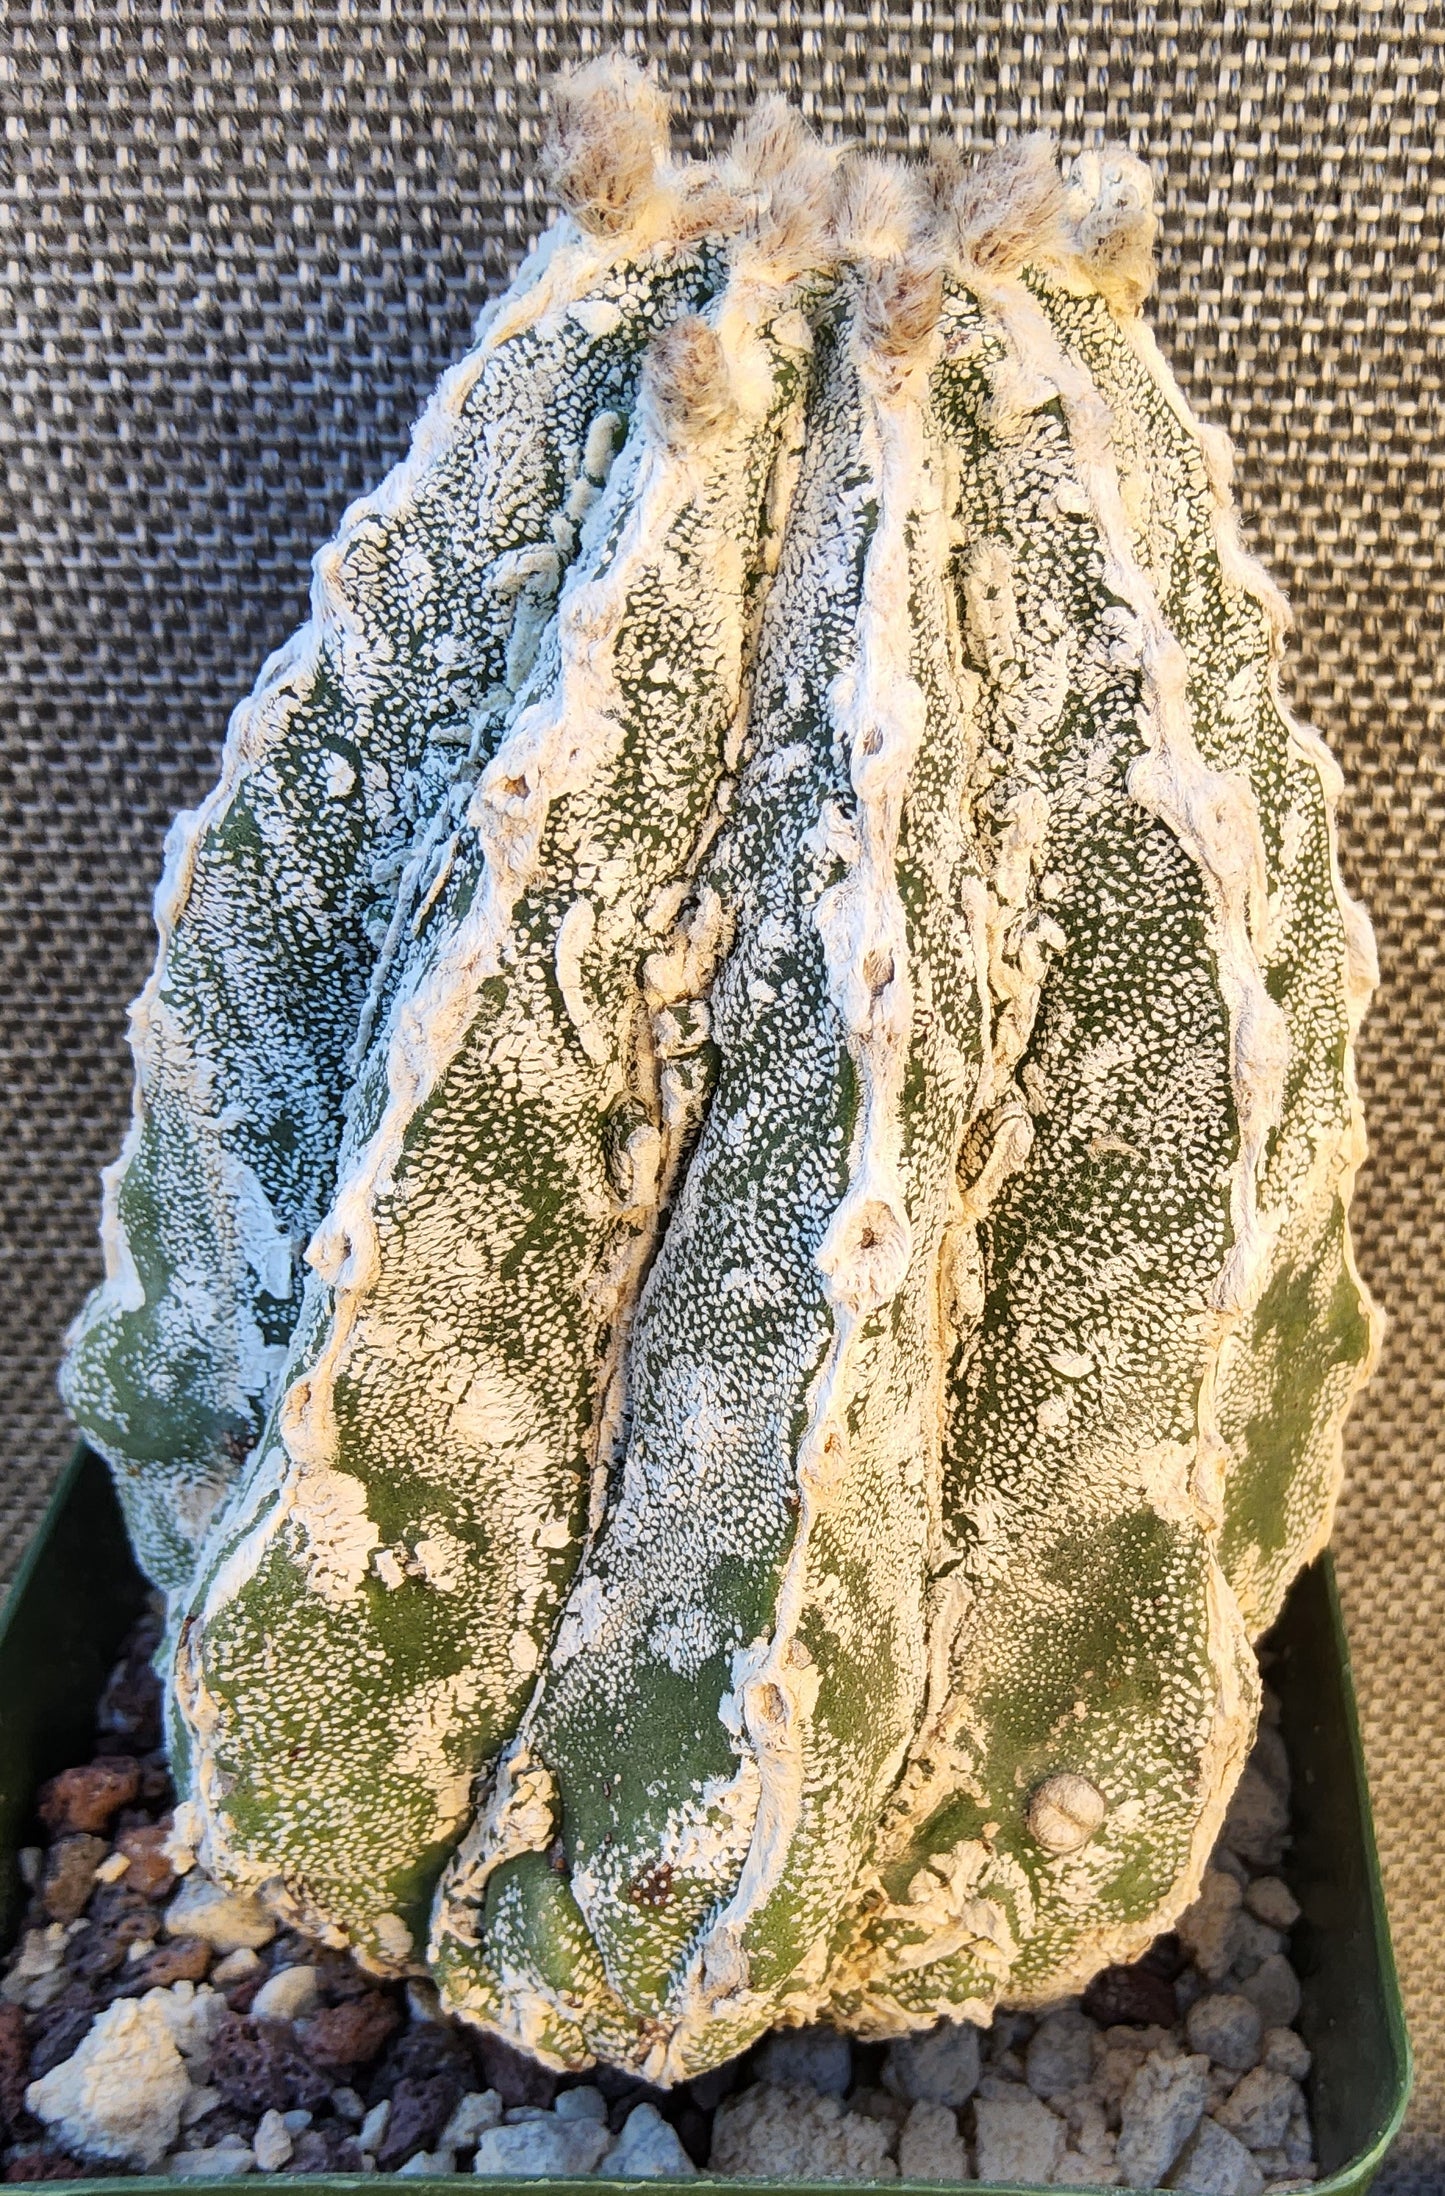 Astrophytum myriostygma Fukuryu Hakujo Hakuun Live Cactus Growing in a 4 Inch